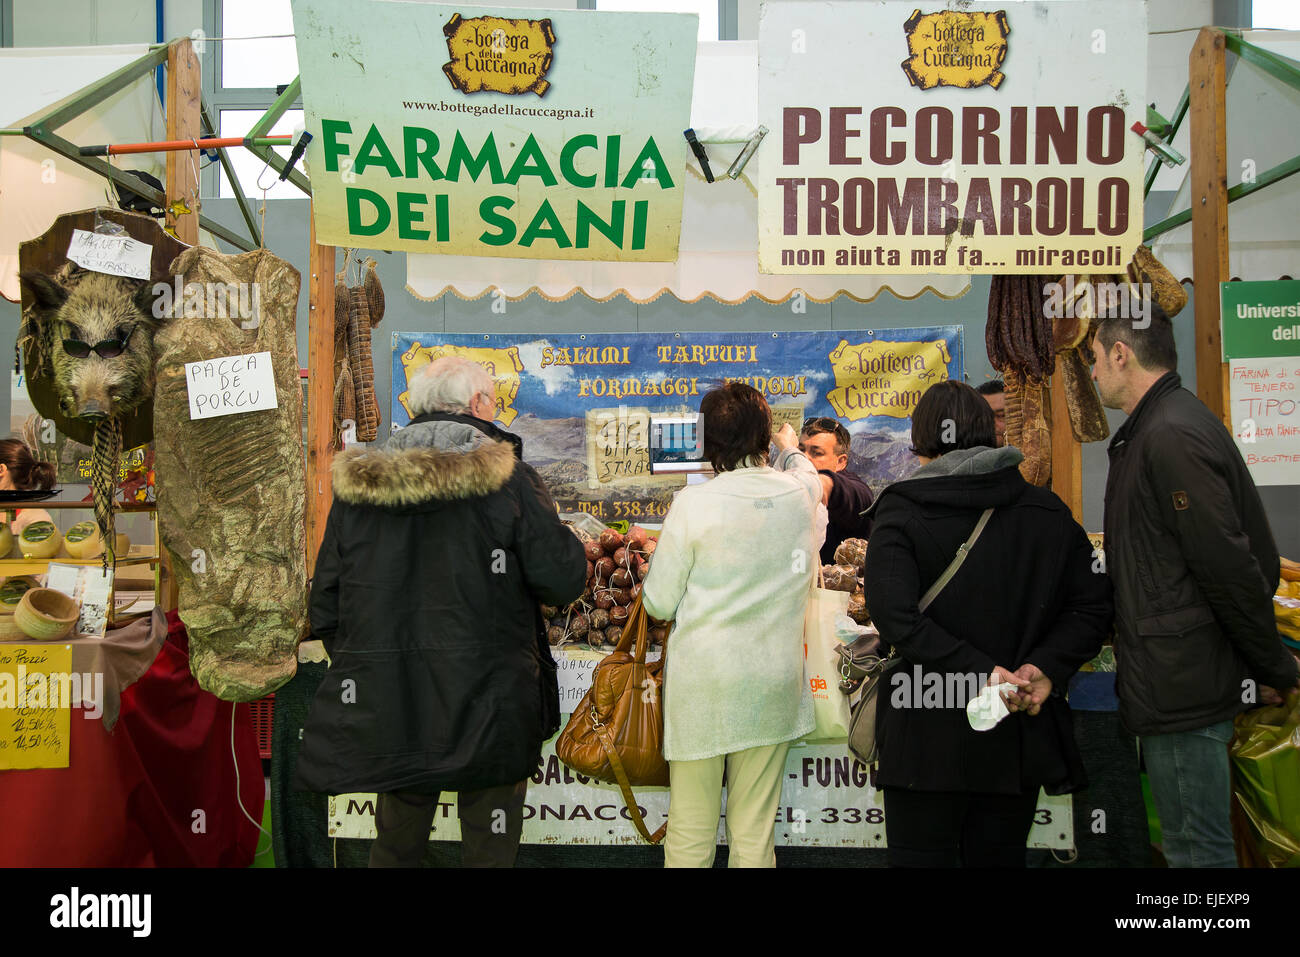 Marche, Fermo, Marche Tipicità, typische 2015, Imbiss-Stand "Bottega della Cuccagna Farmacia dei Sani', Fleisch und Käse aus den Marken Stockfoto